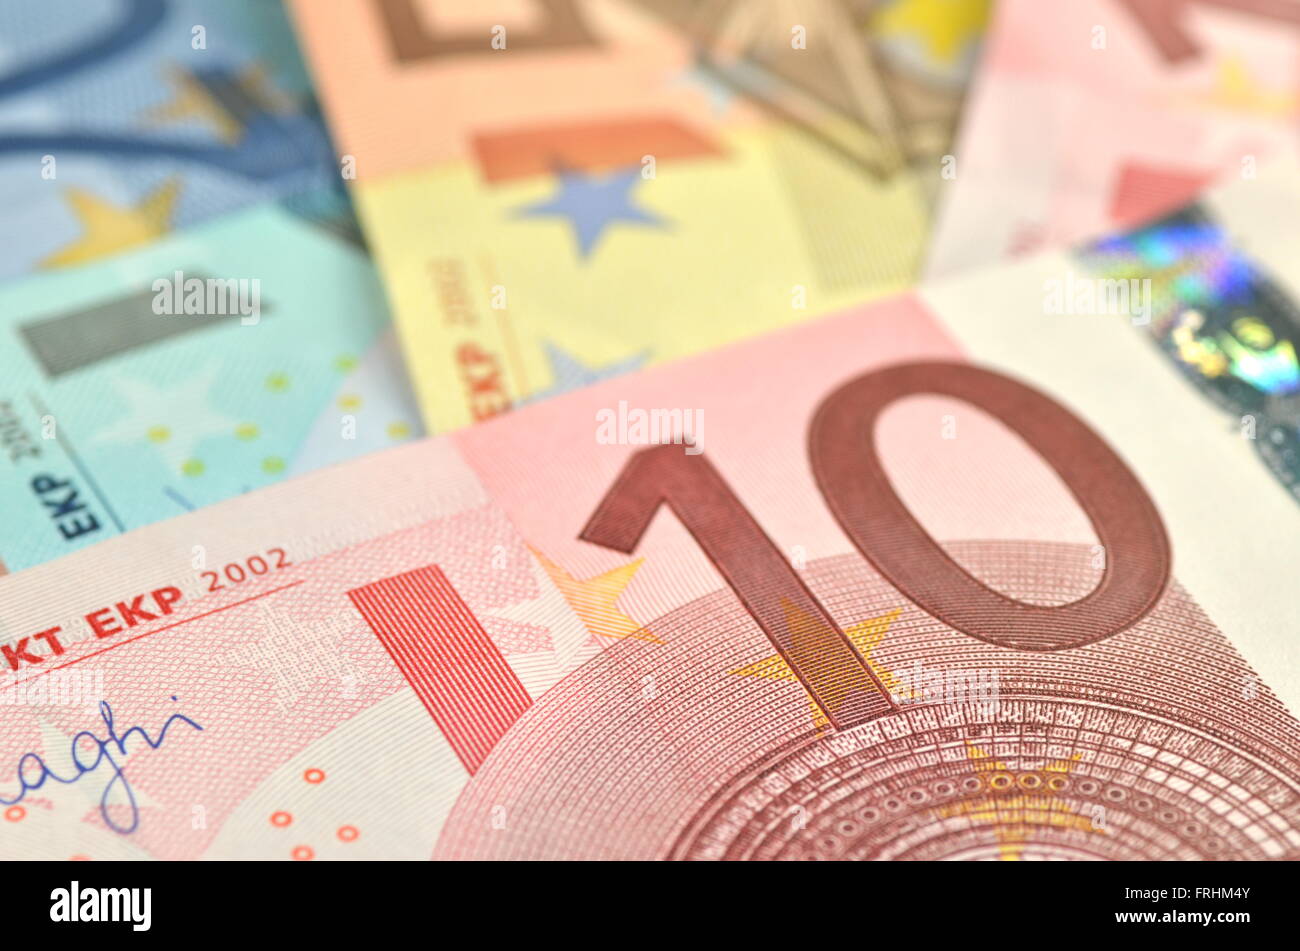 variety of euro banknotes Stock Photo